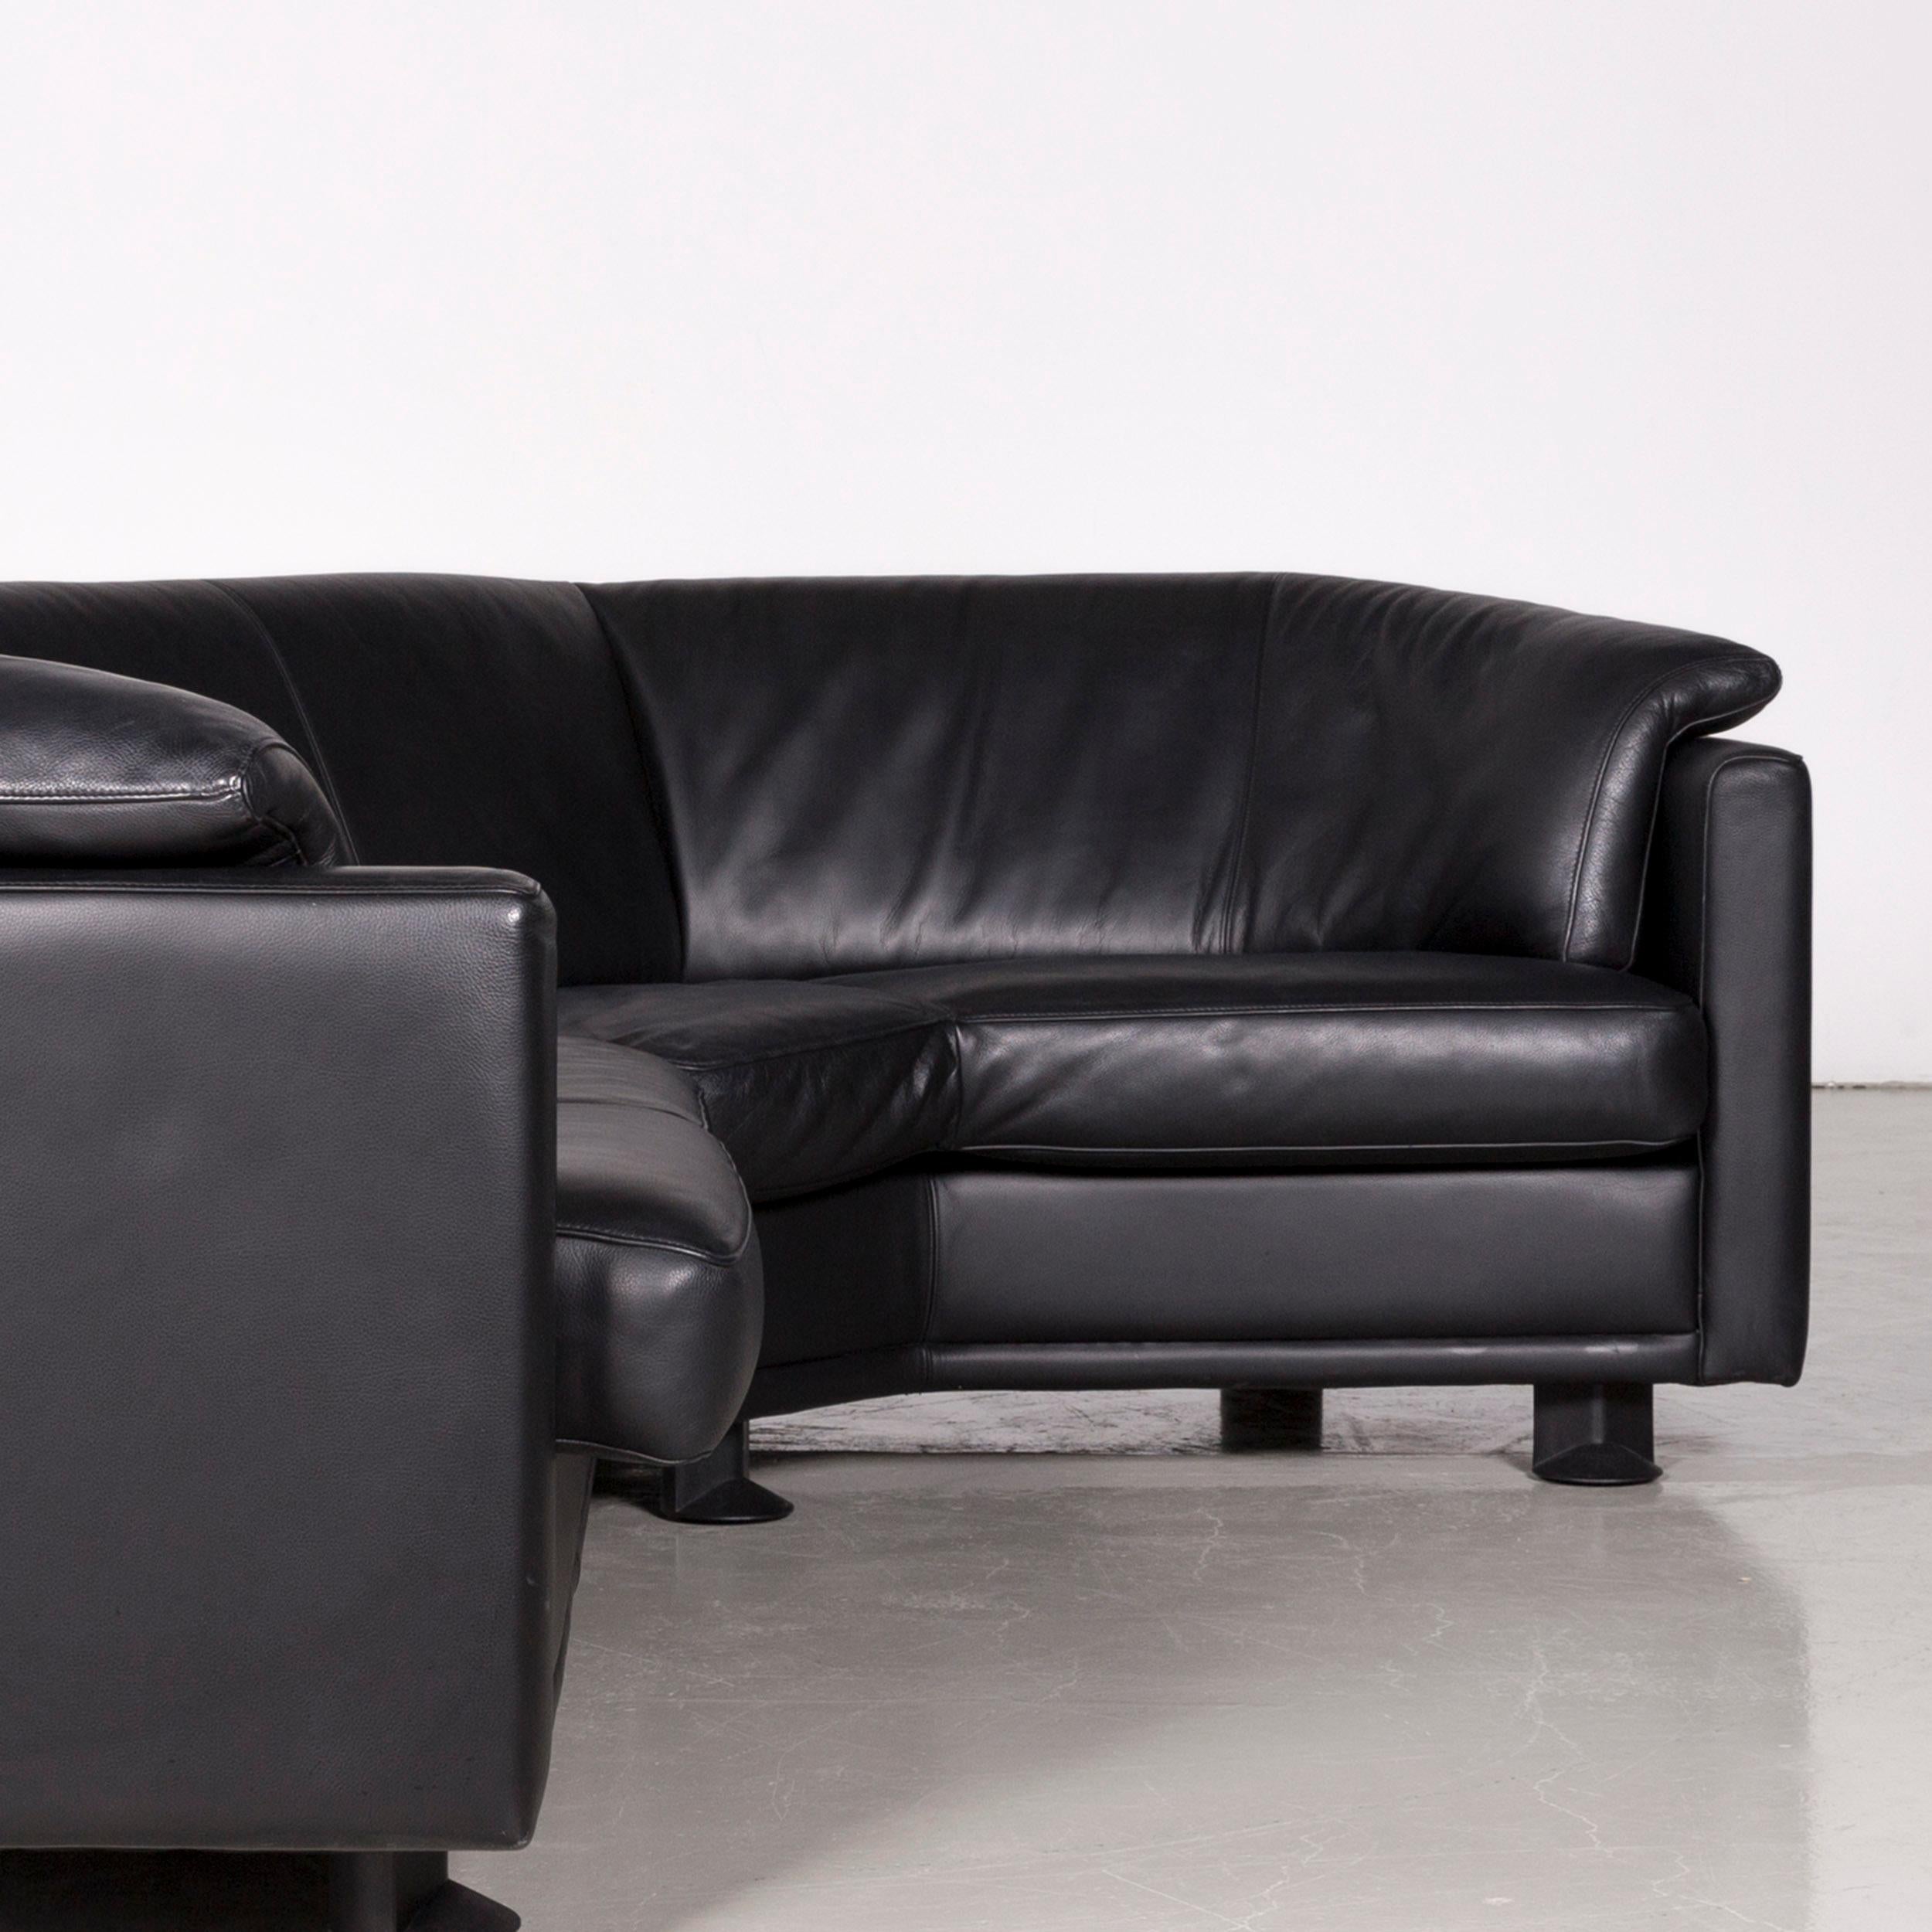 Leolux Designer Corner Couch Leather Black Sofa In Good Condition For Sale In Cologne, DE